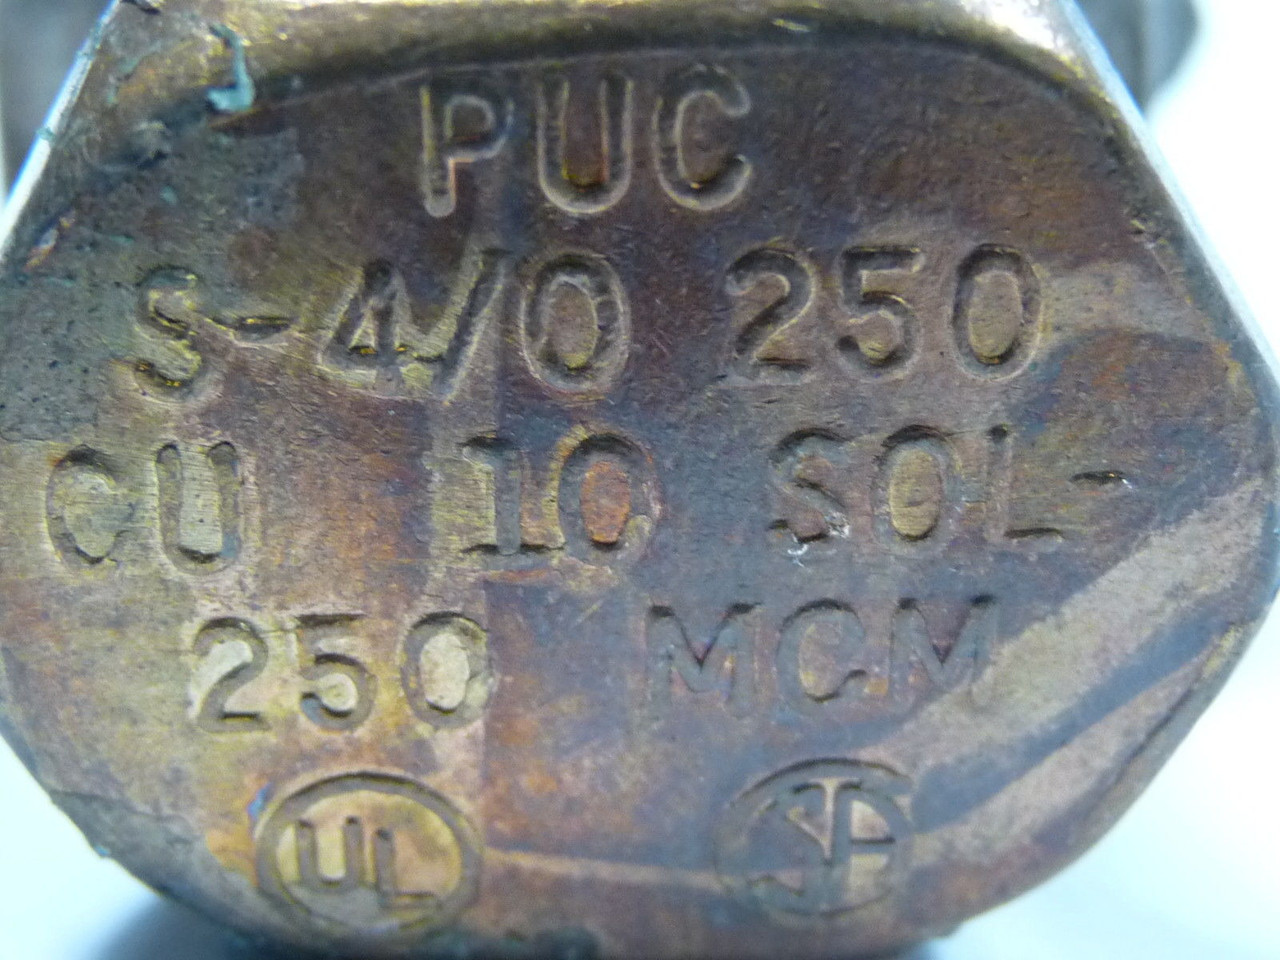 Penn-Union S-4/0-250 Copper Split Bolt Connector 1/0 AWG - 250 MCM USED